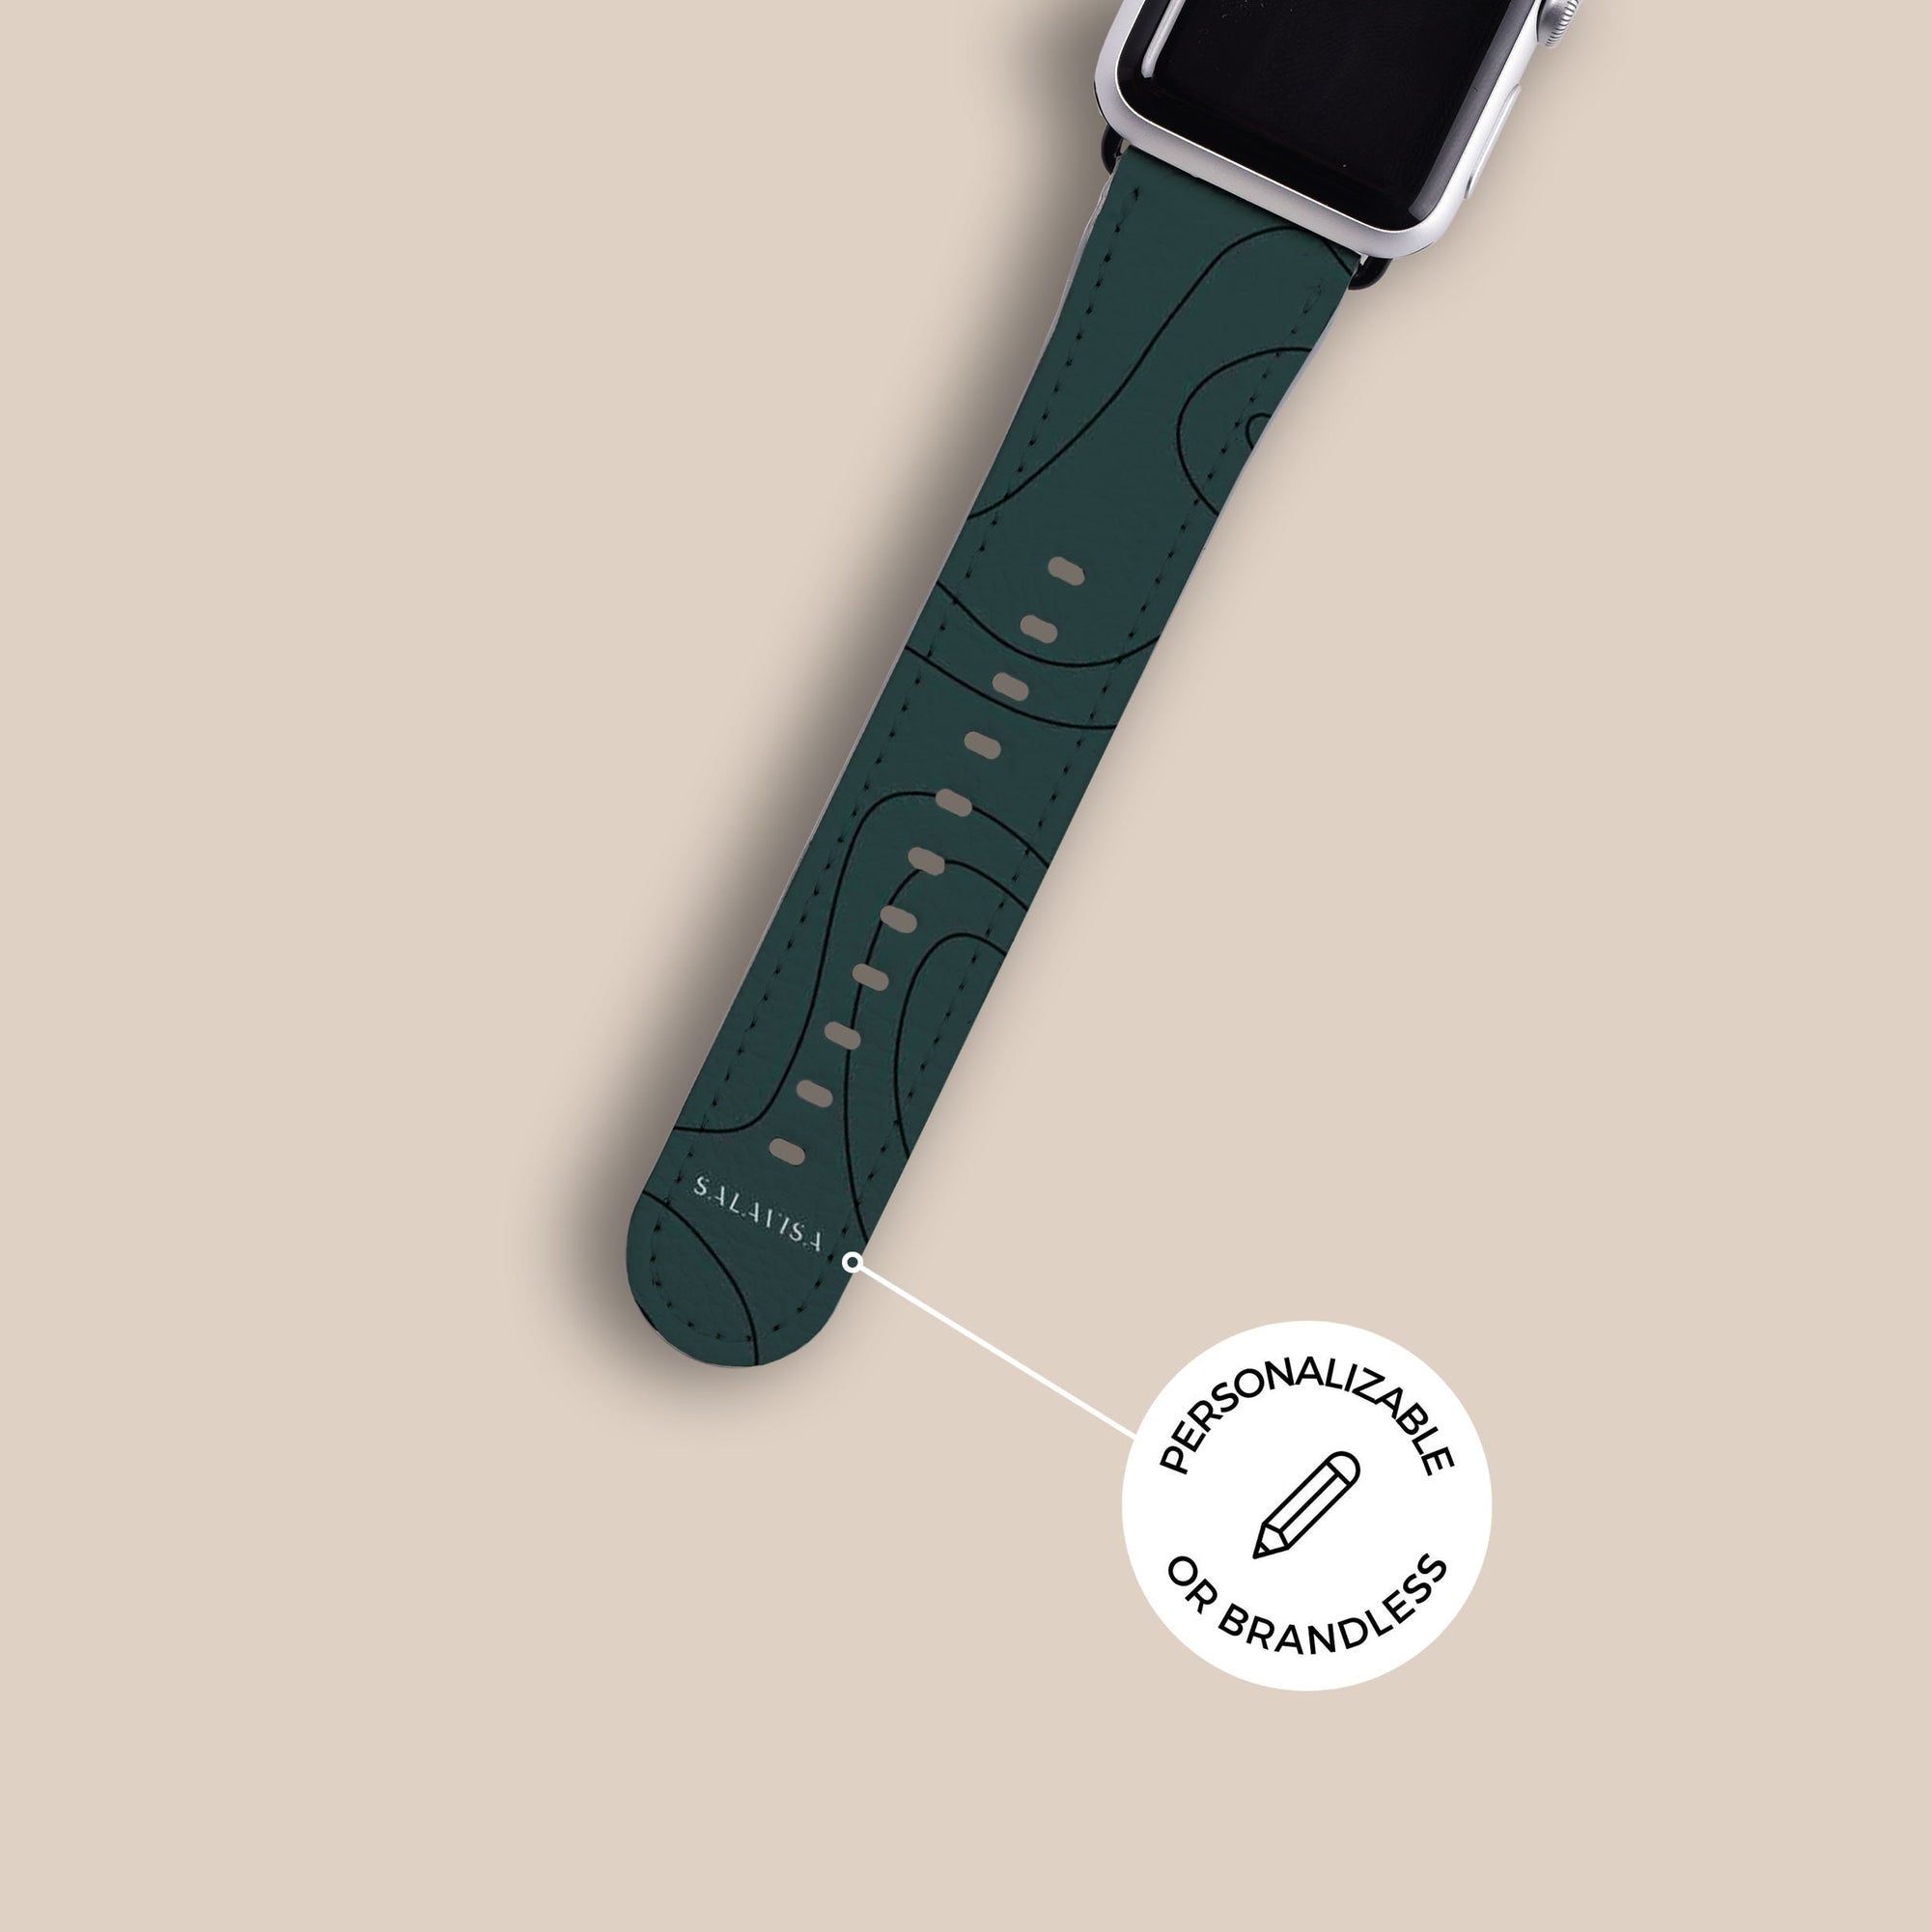 Forest Green Topographic Apple Watch Band Apple Watch Bands - SALAVISA